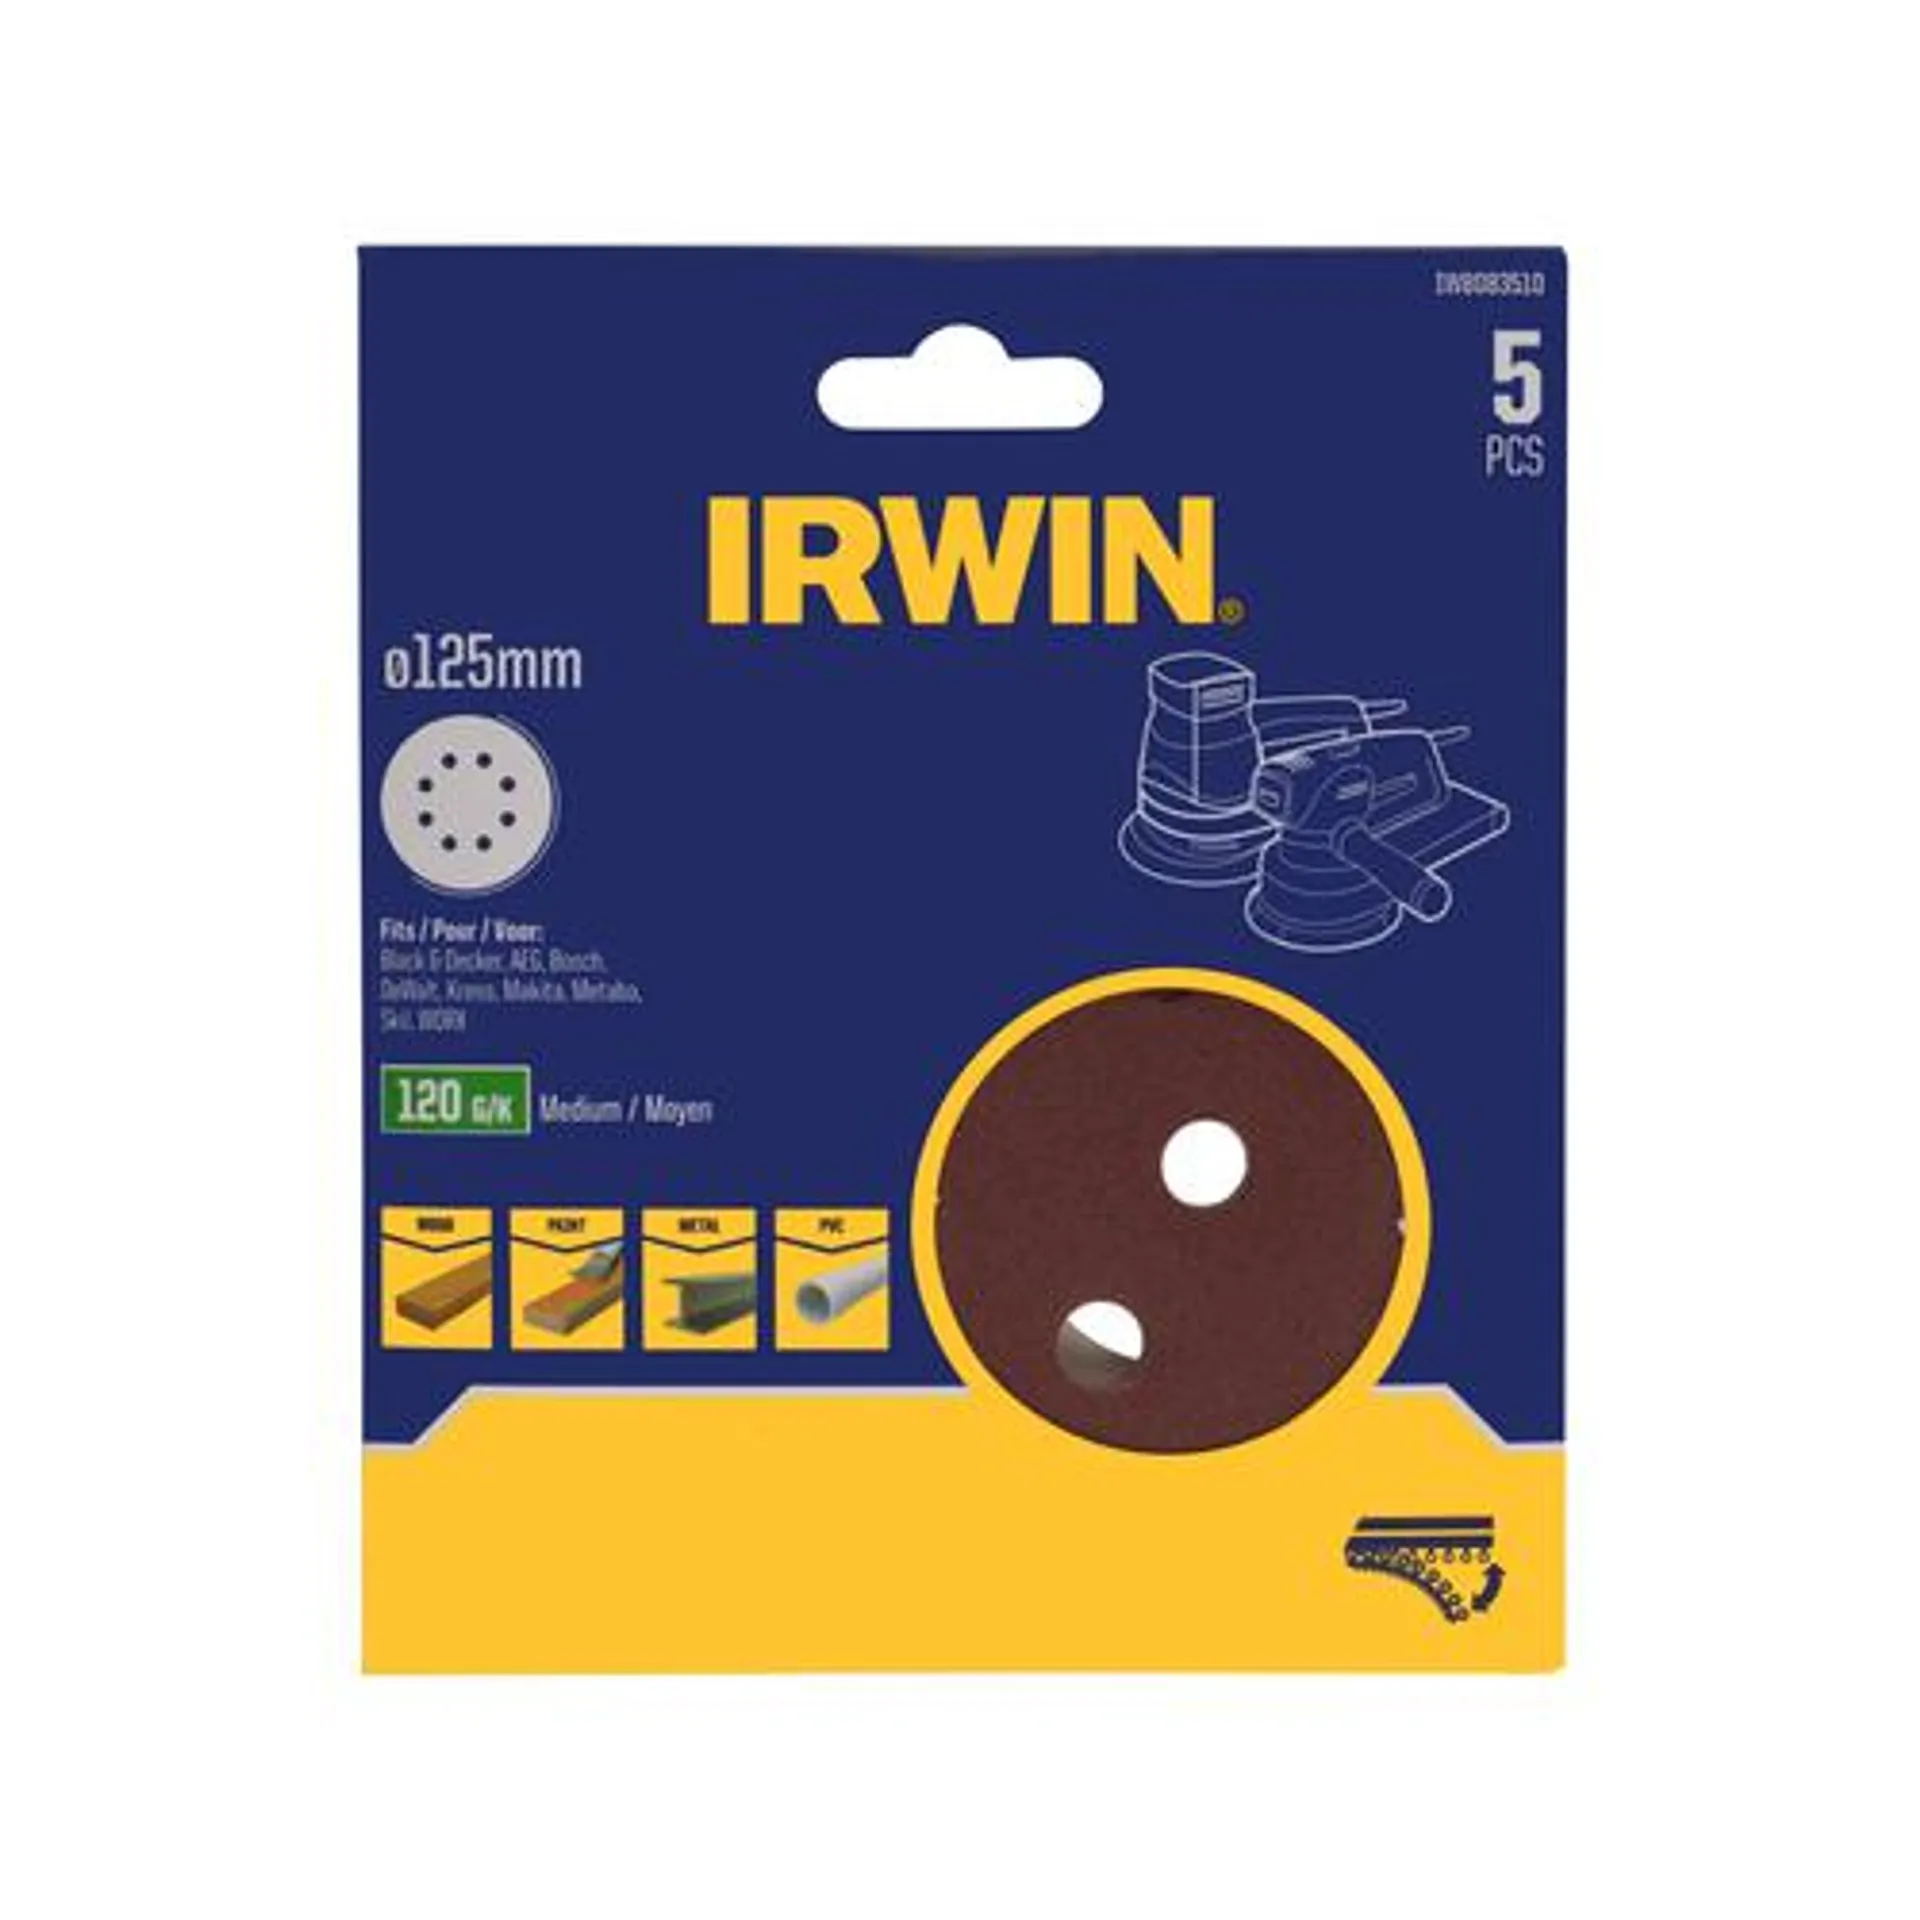 IRWIN 125mm 120 Grit Quick Fit Random Orbital Sanding Discs 8 Holes - 5 Pack